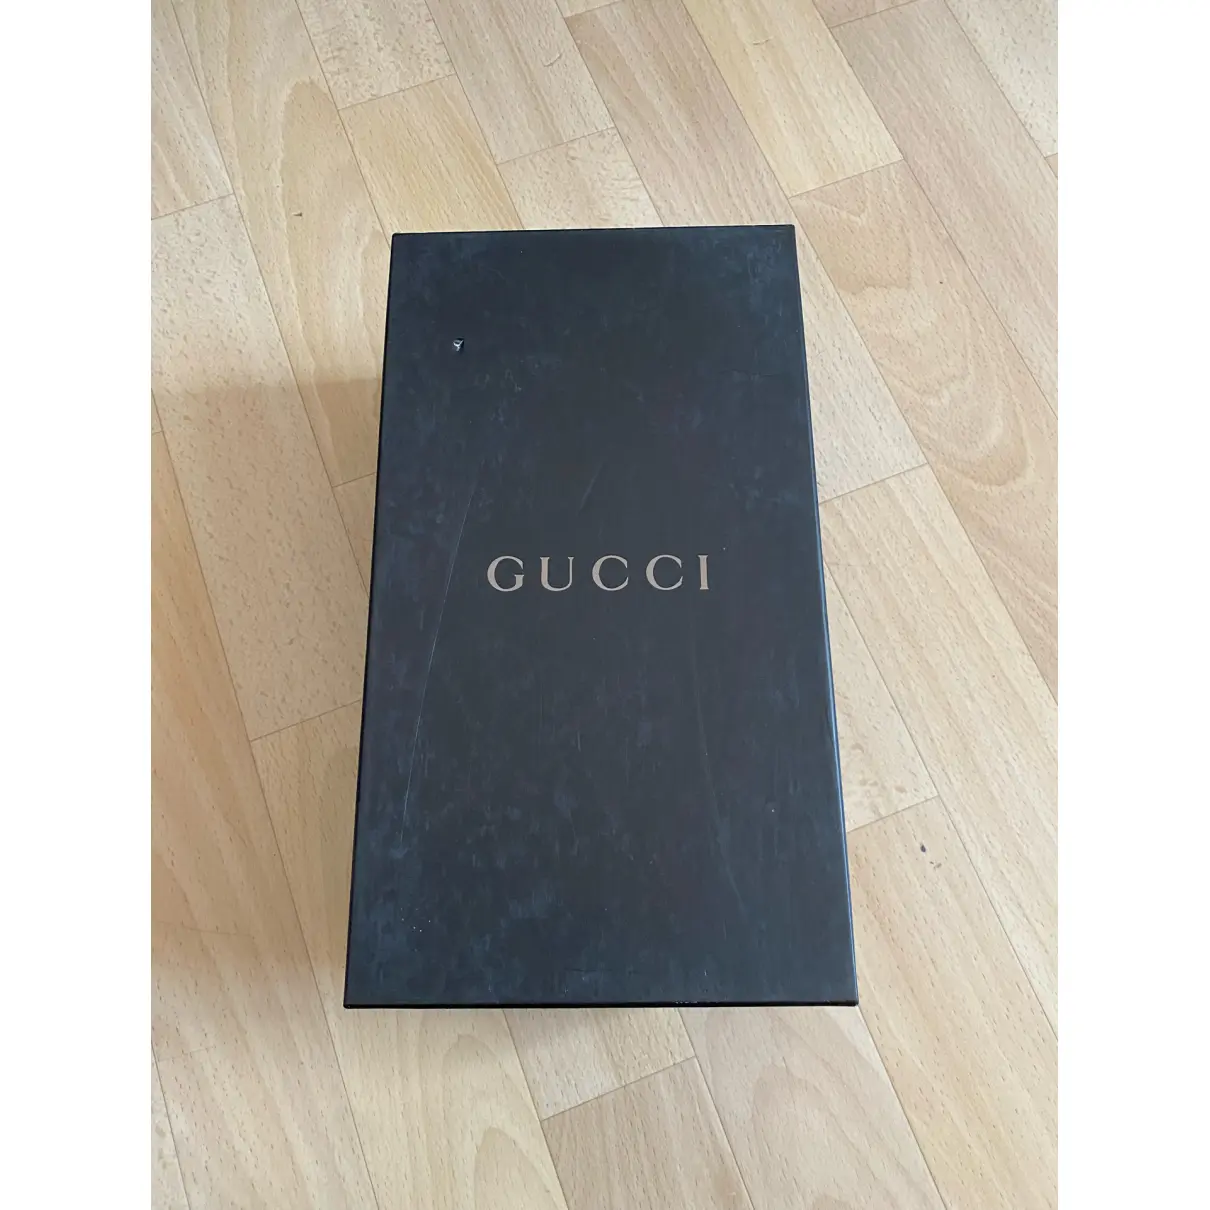 Jordaan leather flats Gucci